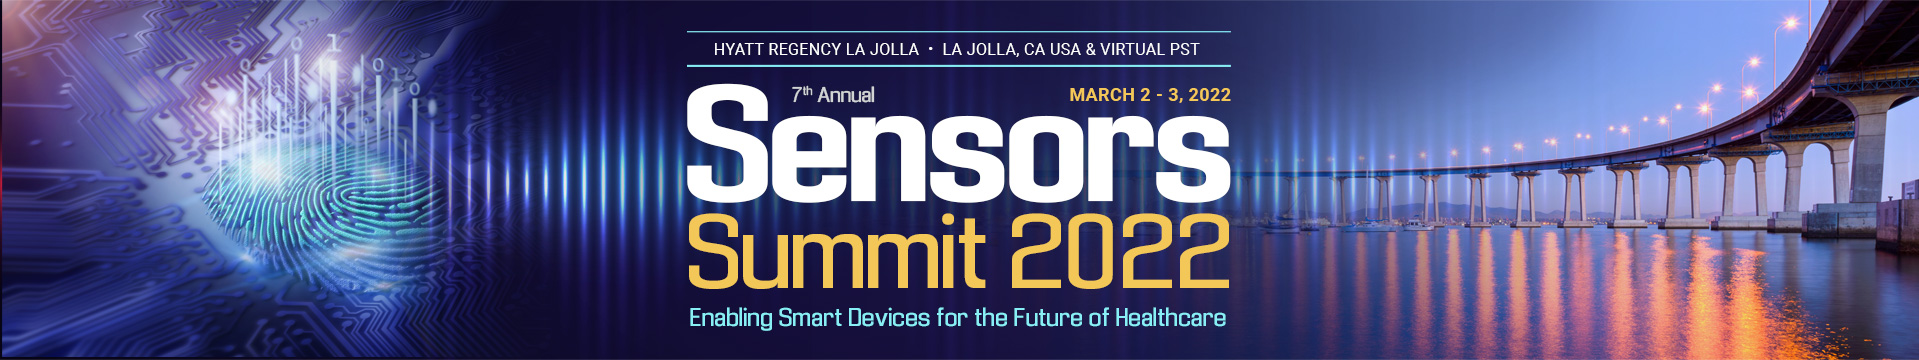 Sensors Summit 2022, Hyatt Regency La Jolla, 3777 La Jolla Dr La Jolla, CA 92122, 03/02/2022 12:00 AM - 03/03/2022 12:00 AM